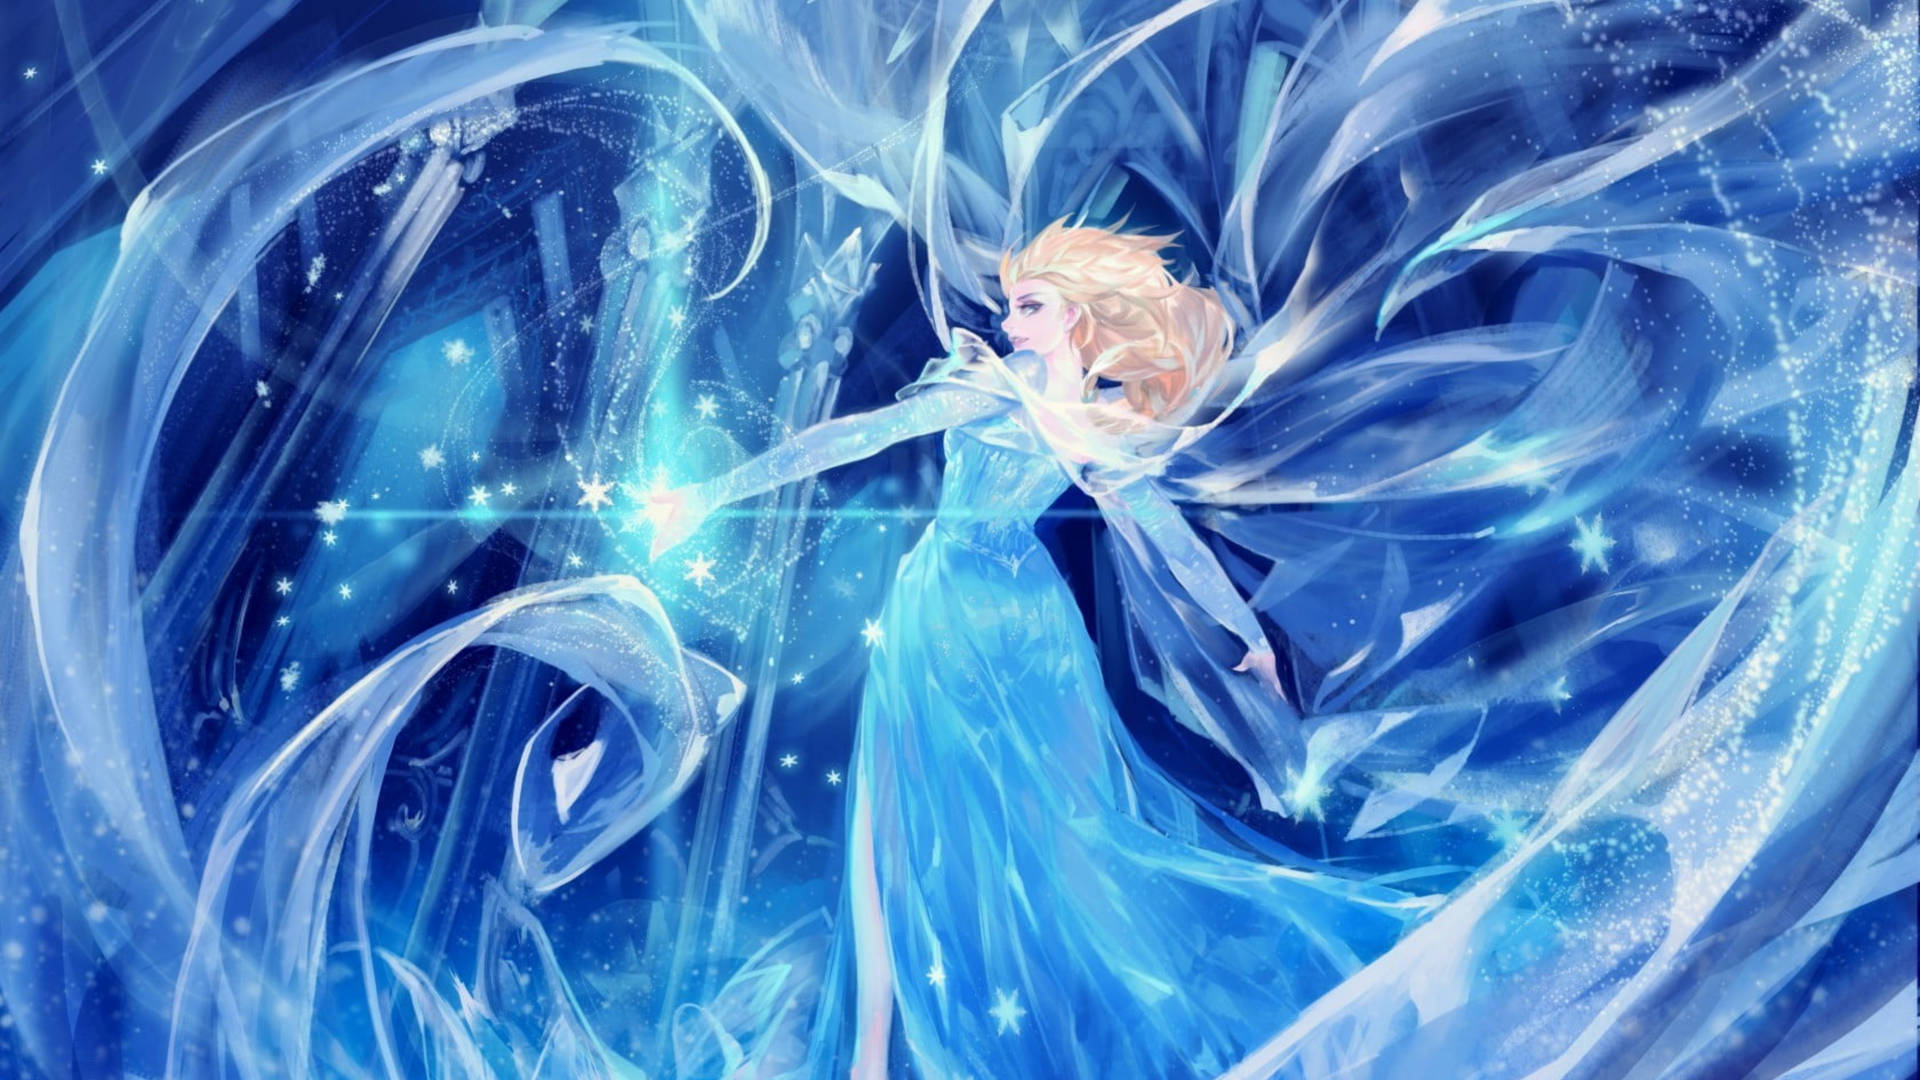 Elsaaus Frozen Im Anime-stil Fanart Wallpaper